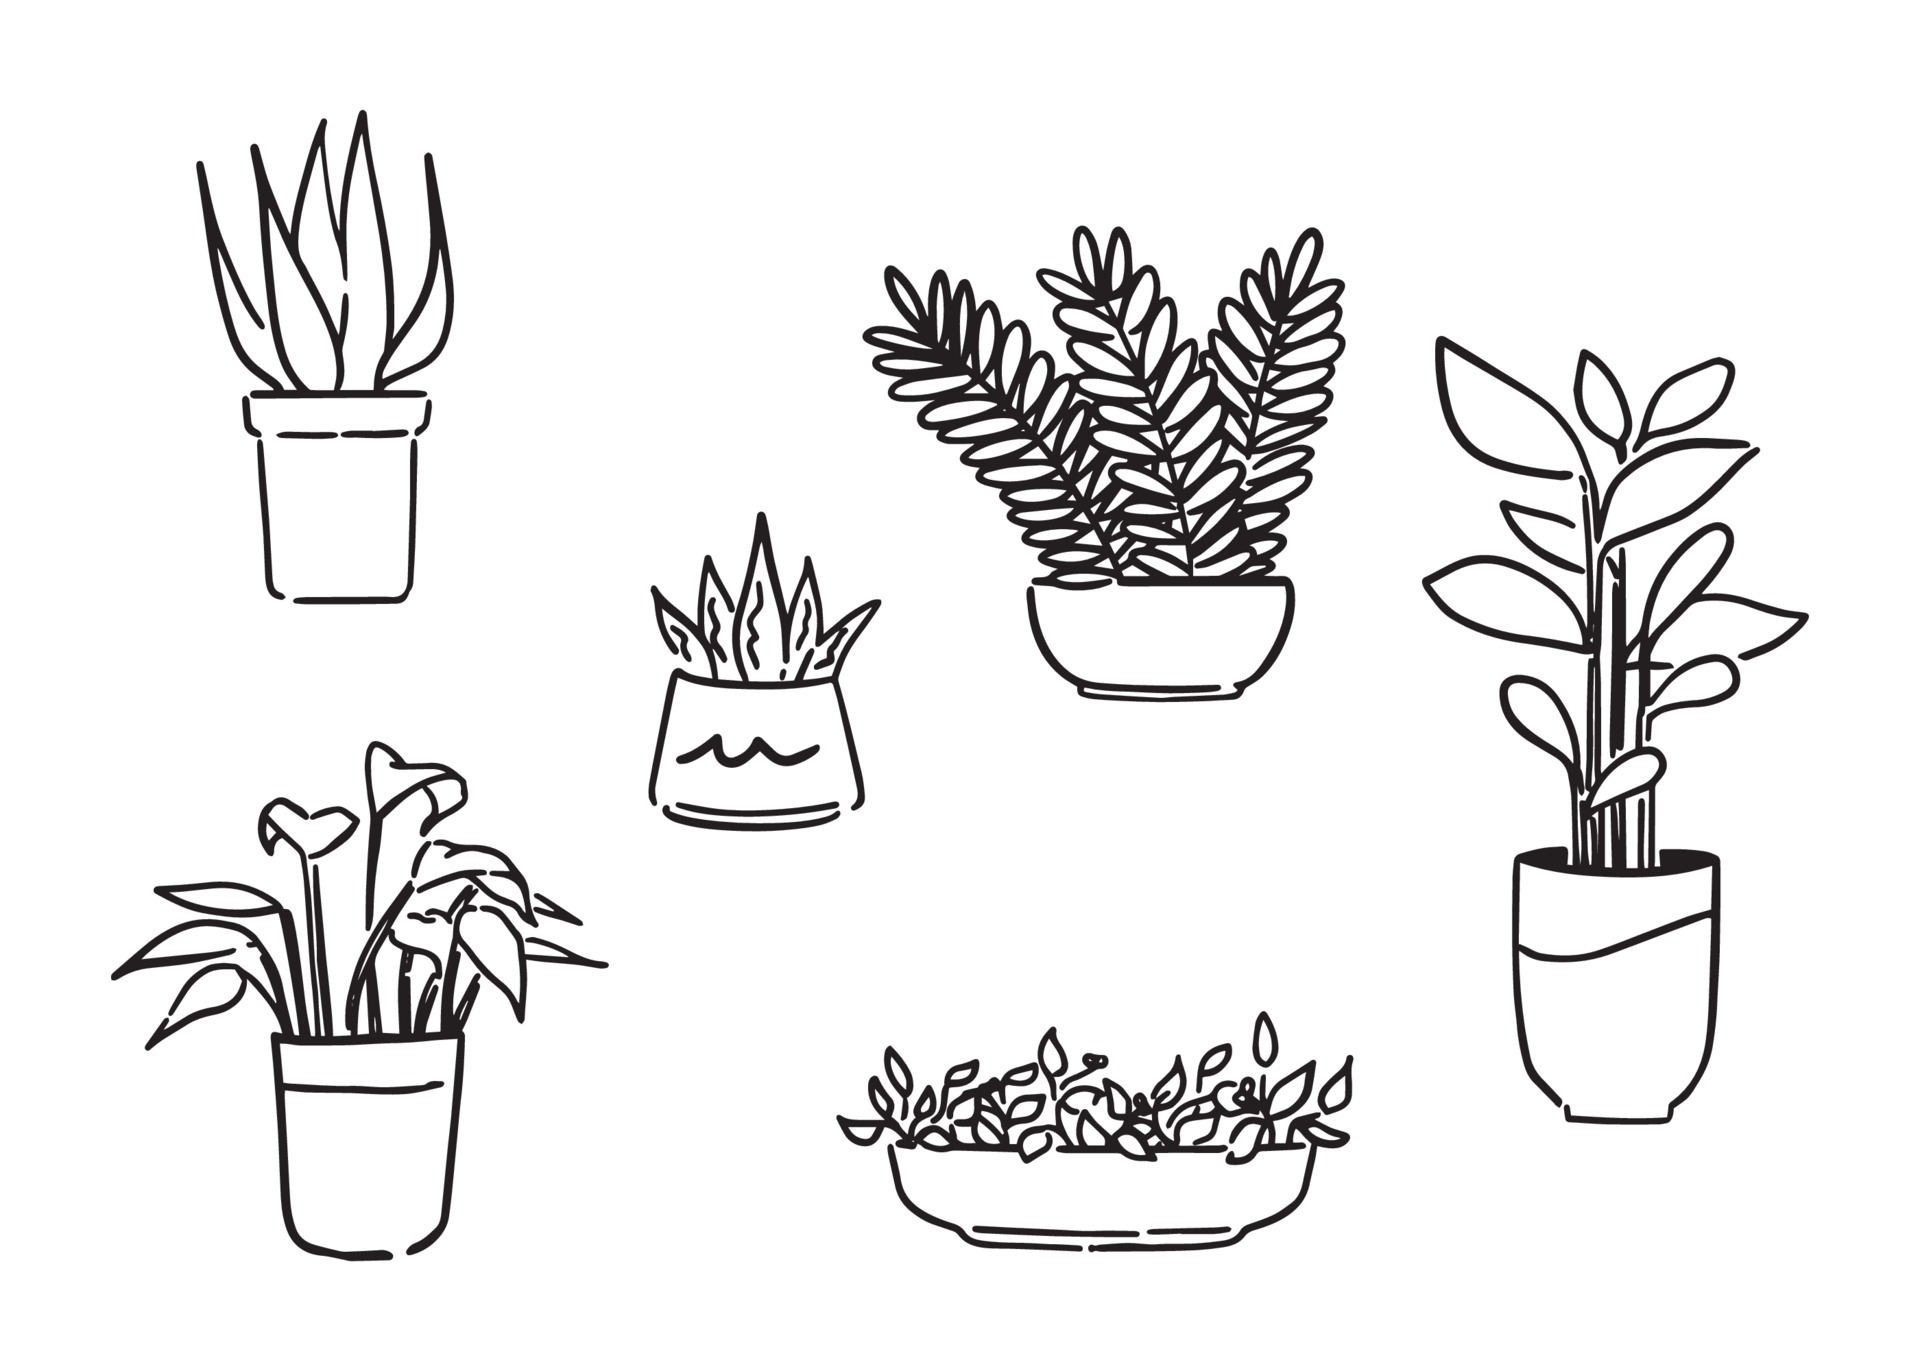 https://static.vecteezy.com/system/resources/previews/002/006/644/original/set-of-ornamental-plants-living-room-interior-design-concept-doodle-outline-icon-hand-drawn-style-illustration-vector.jpg